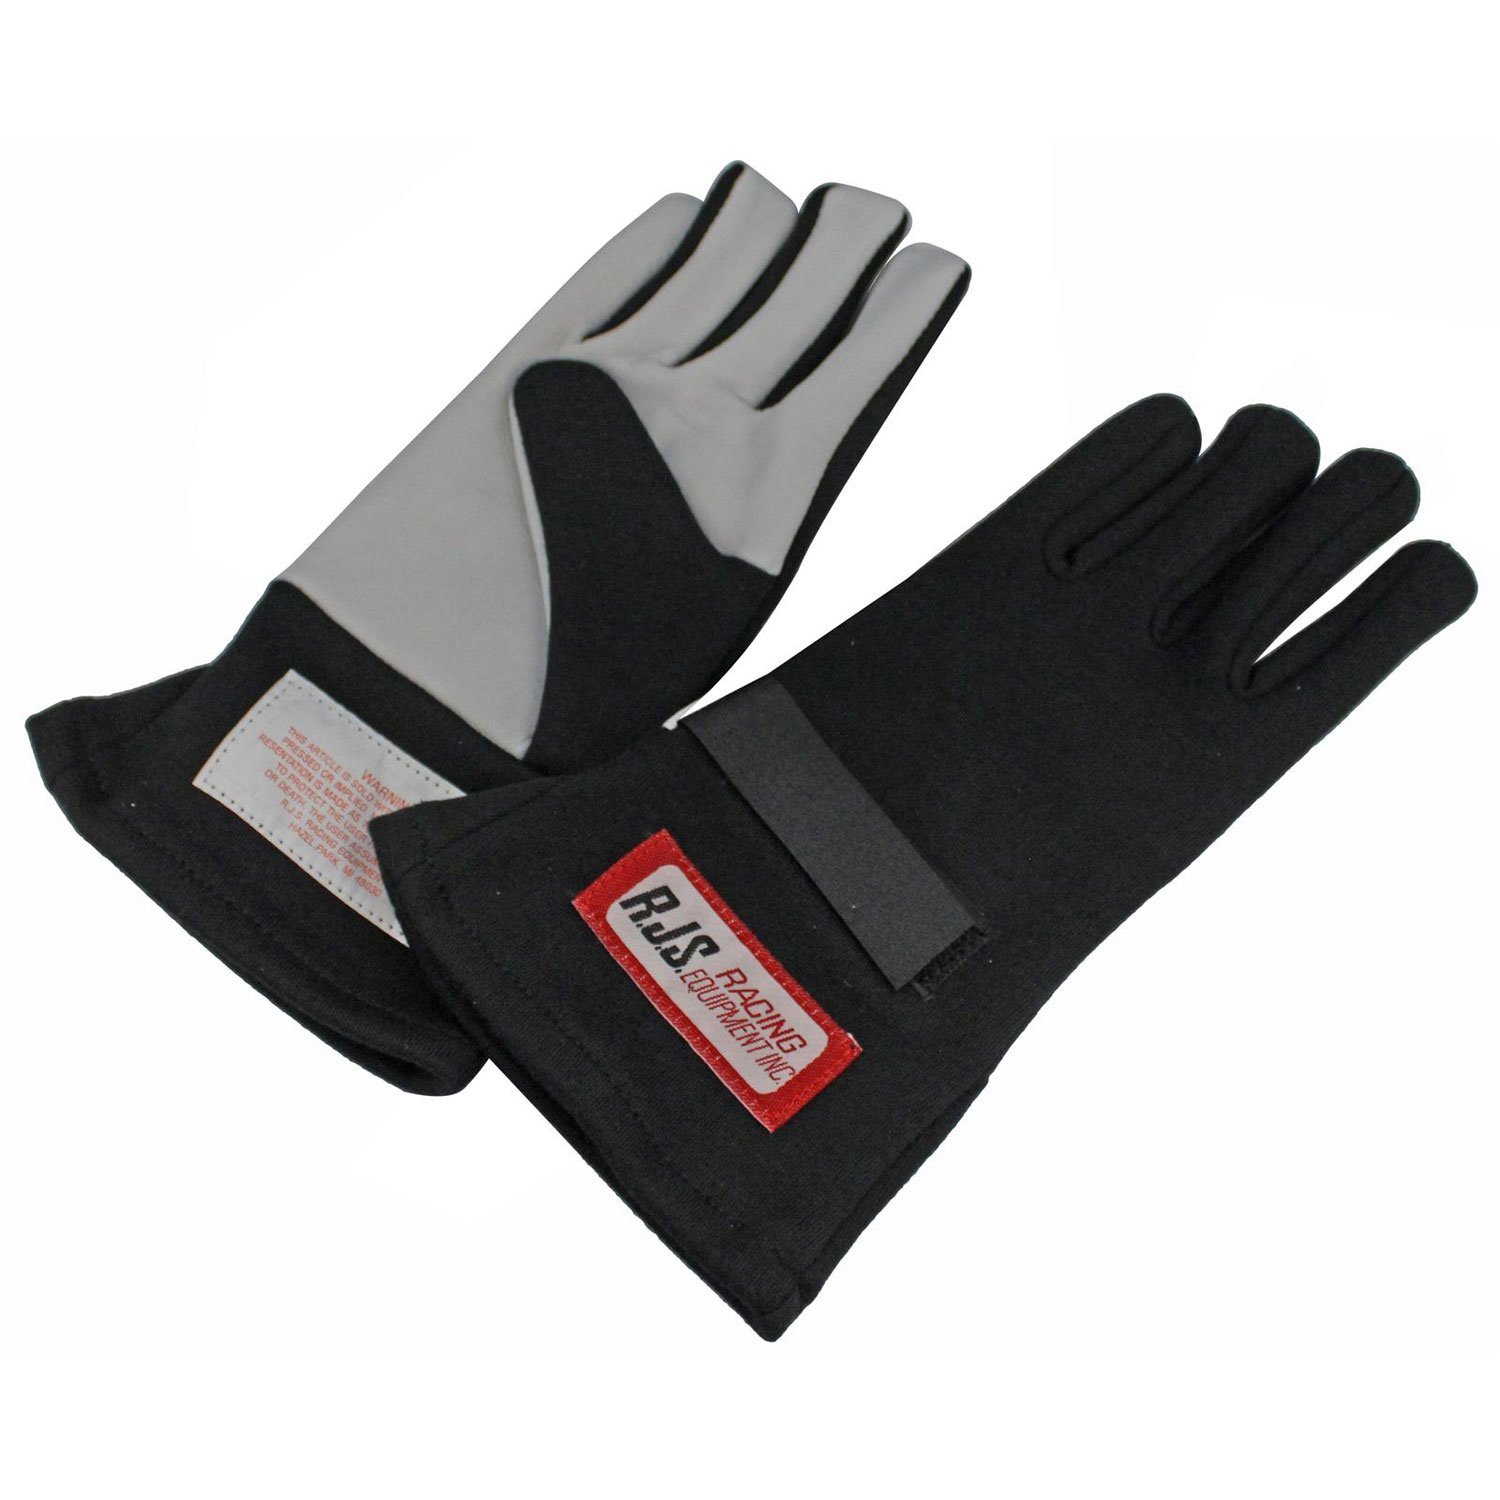 RJS Racing Classic Single-Layer Racing Gloves